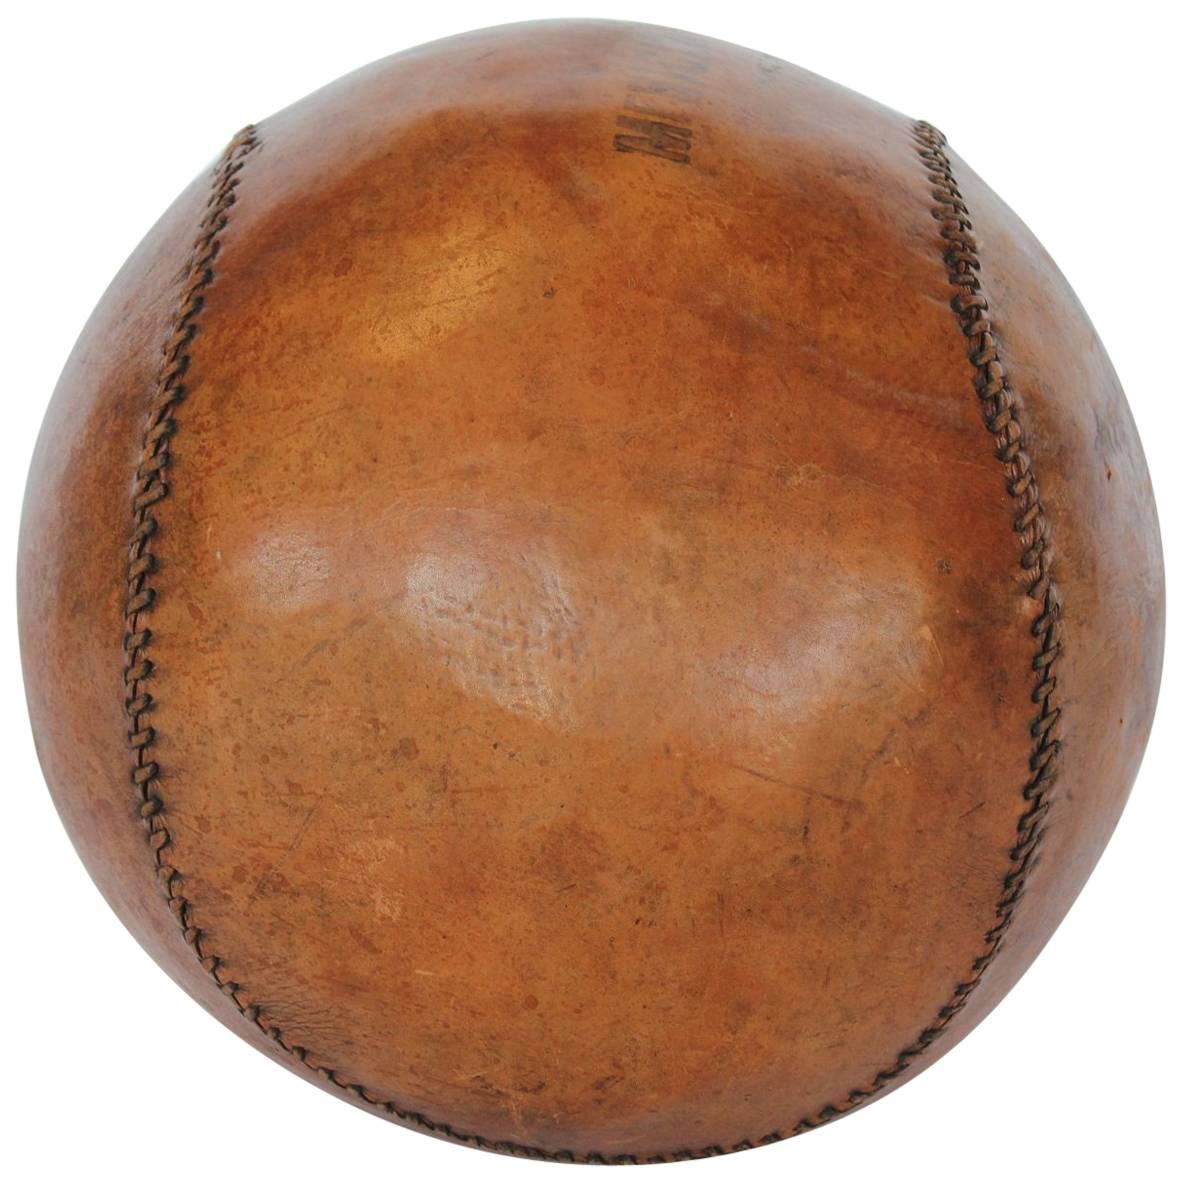 1950s Leather Medicine Ball